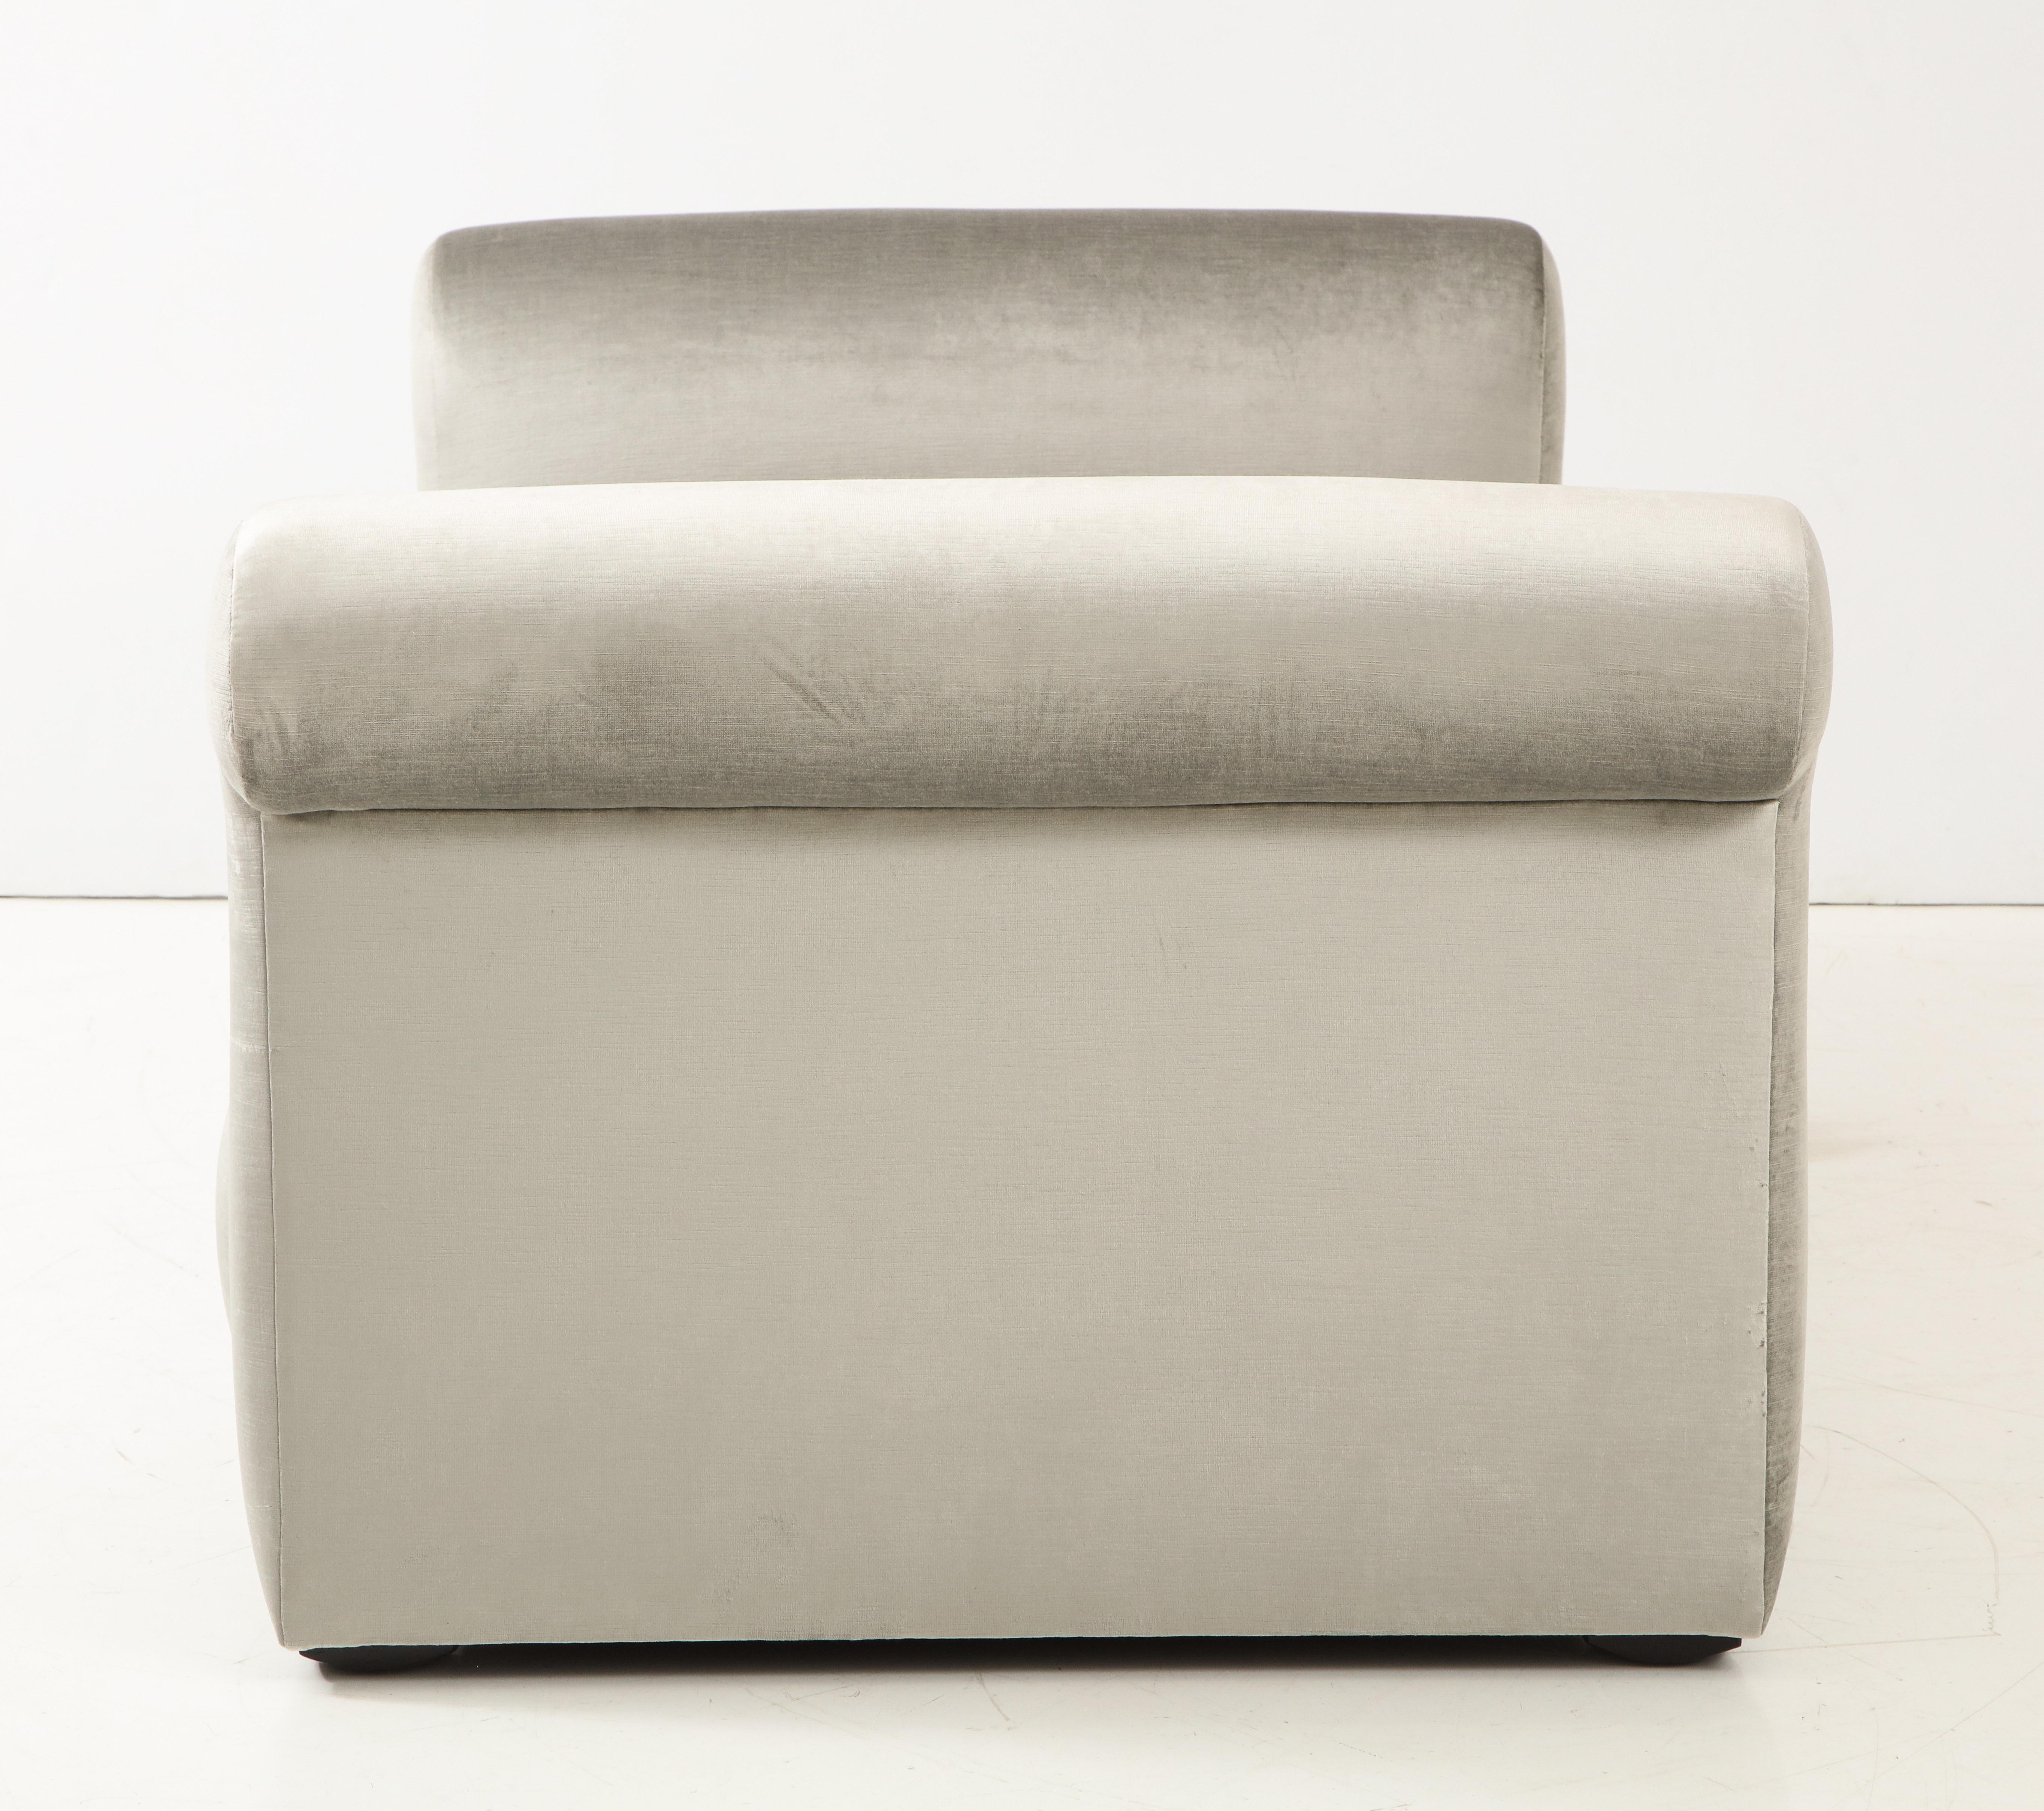 Custom Designed Chaise Lounge by Steve Chase (Ende des 20. Jahrhunderts)